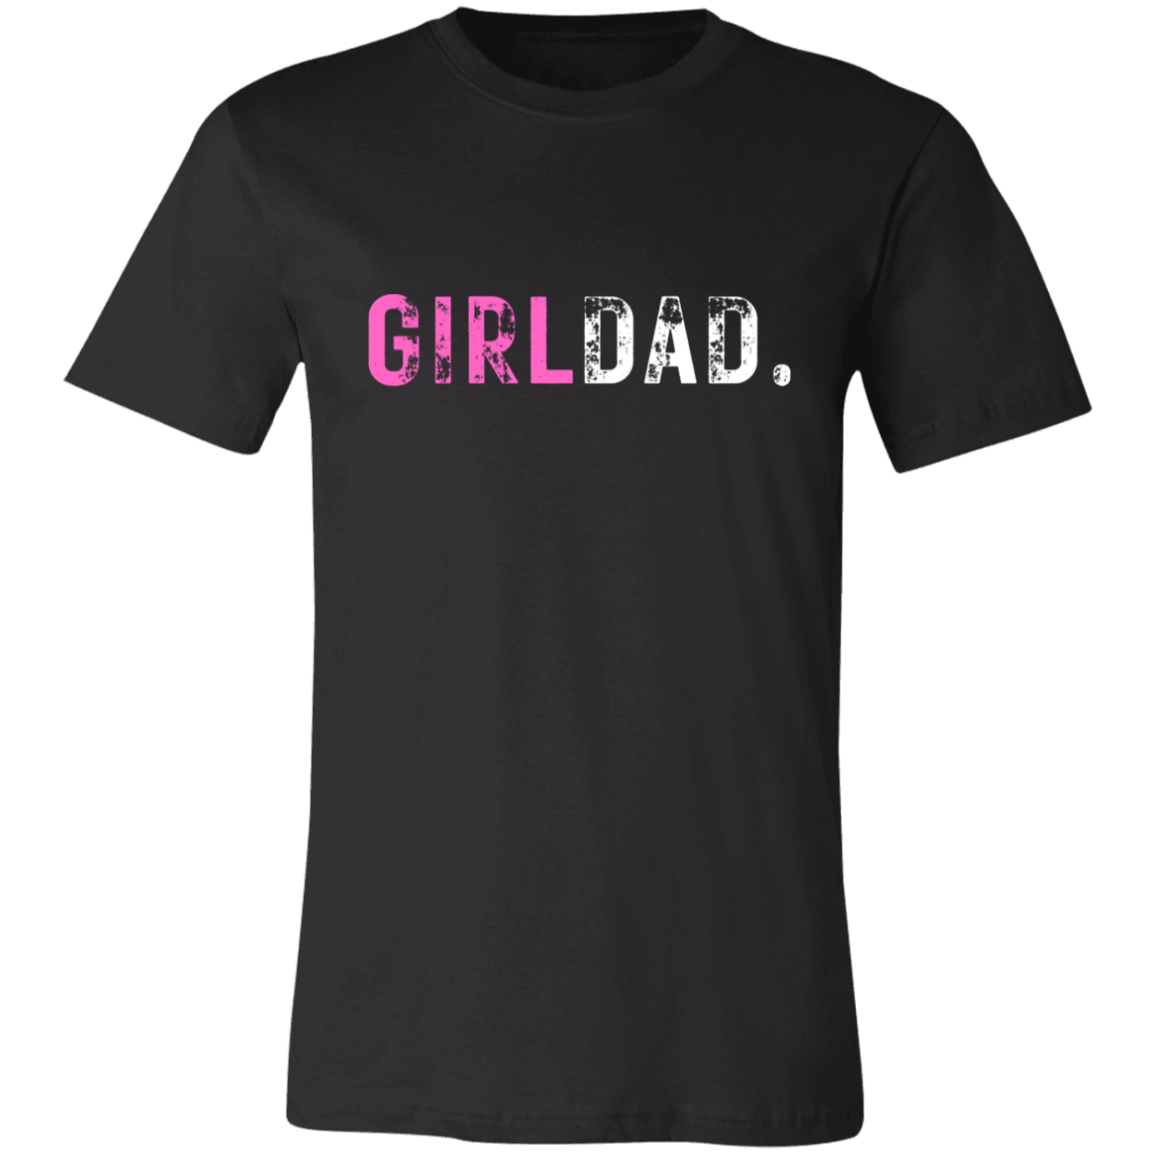 Girldad Short-Sleeve T-Shirt